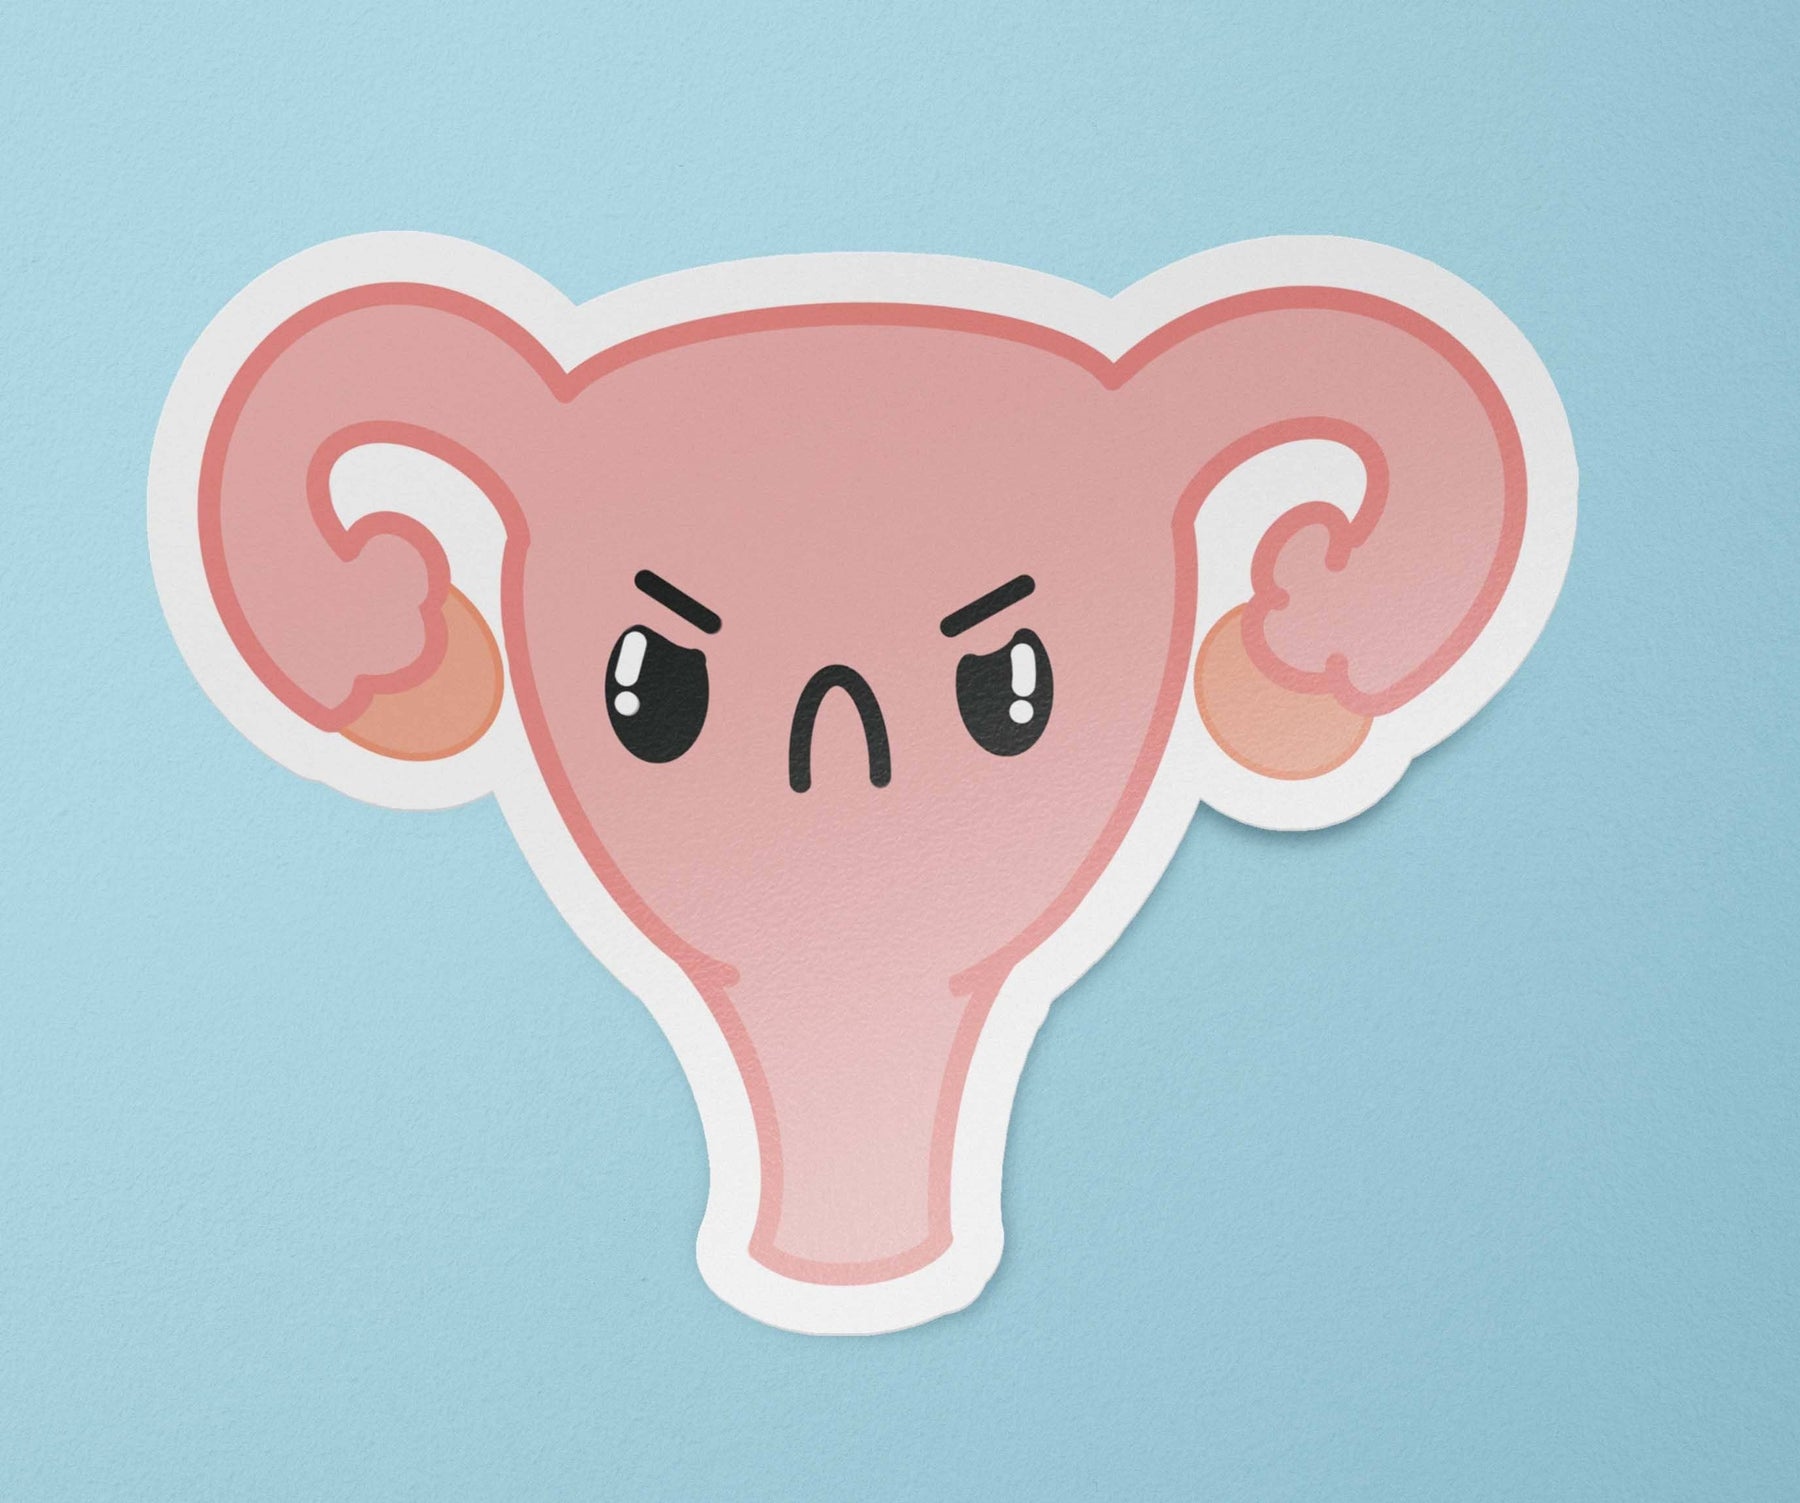 Angry Uterus Sticker | Pro Choice Sticker | My Body My Choice Decal | Feminist Sticker | Abortion Sticker | Pro-Choice | Keep Abortion